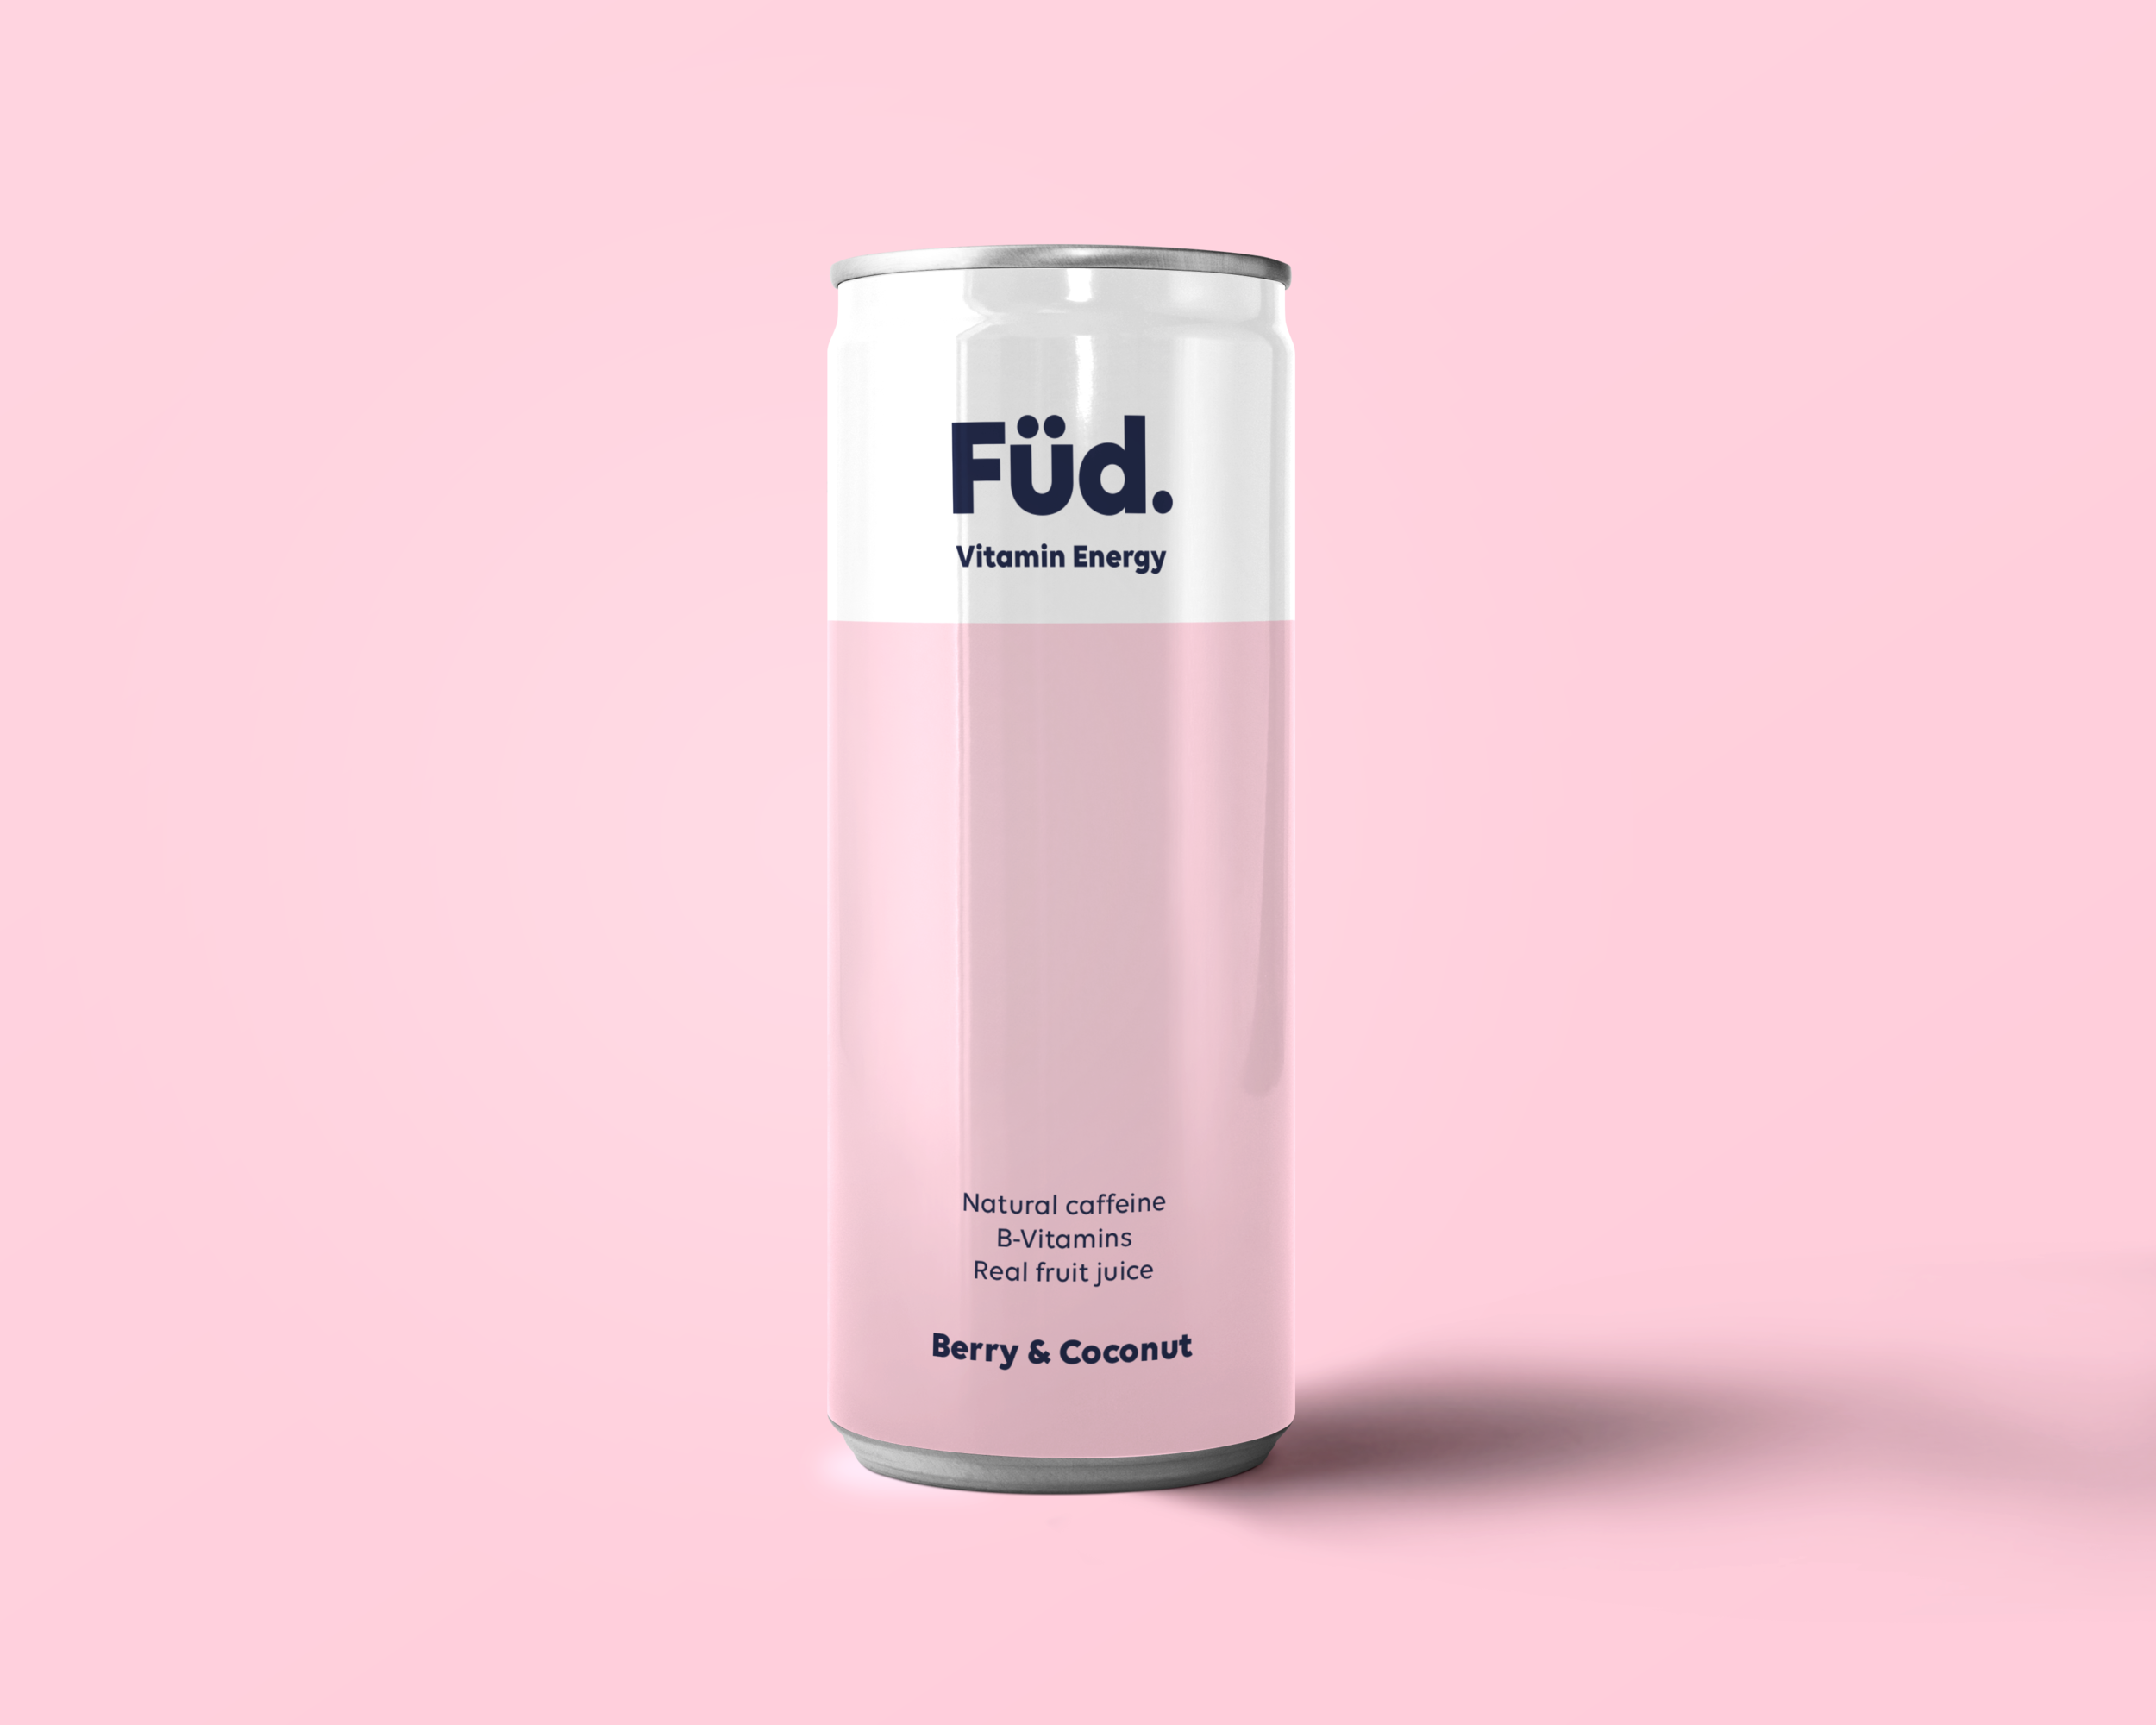 Food and beverage packaging designer UK. A pink can of Füd vitamin drink